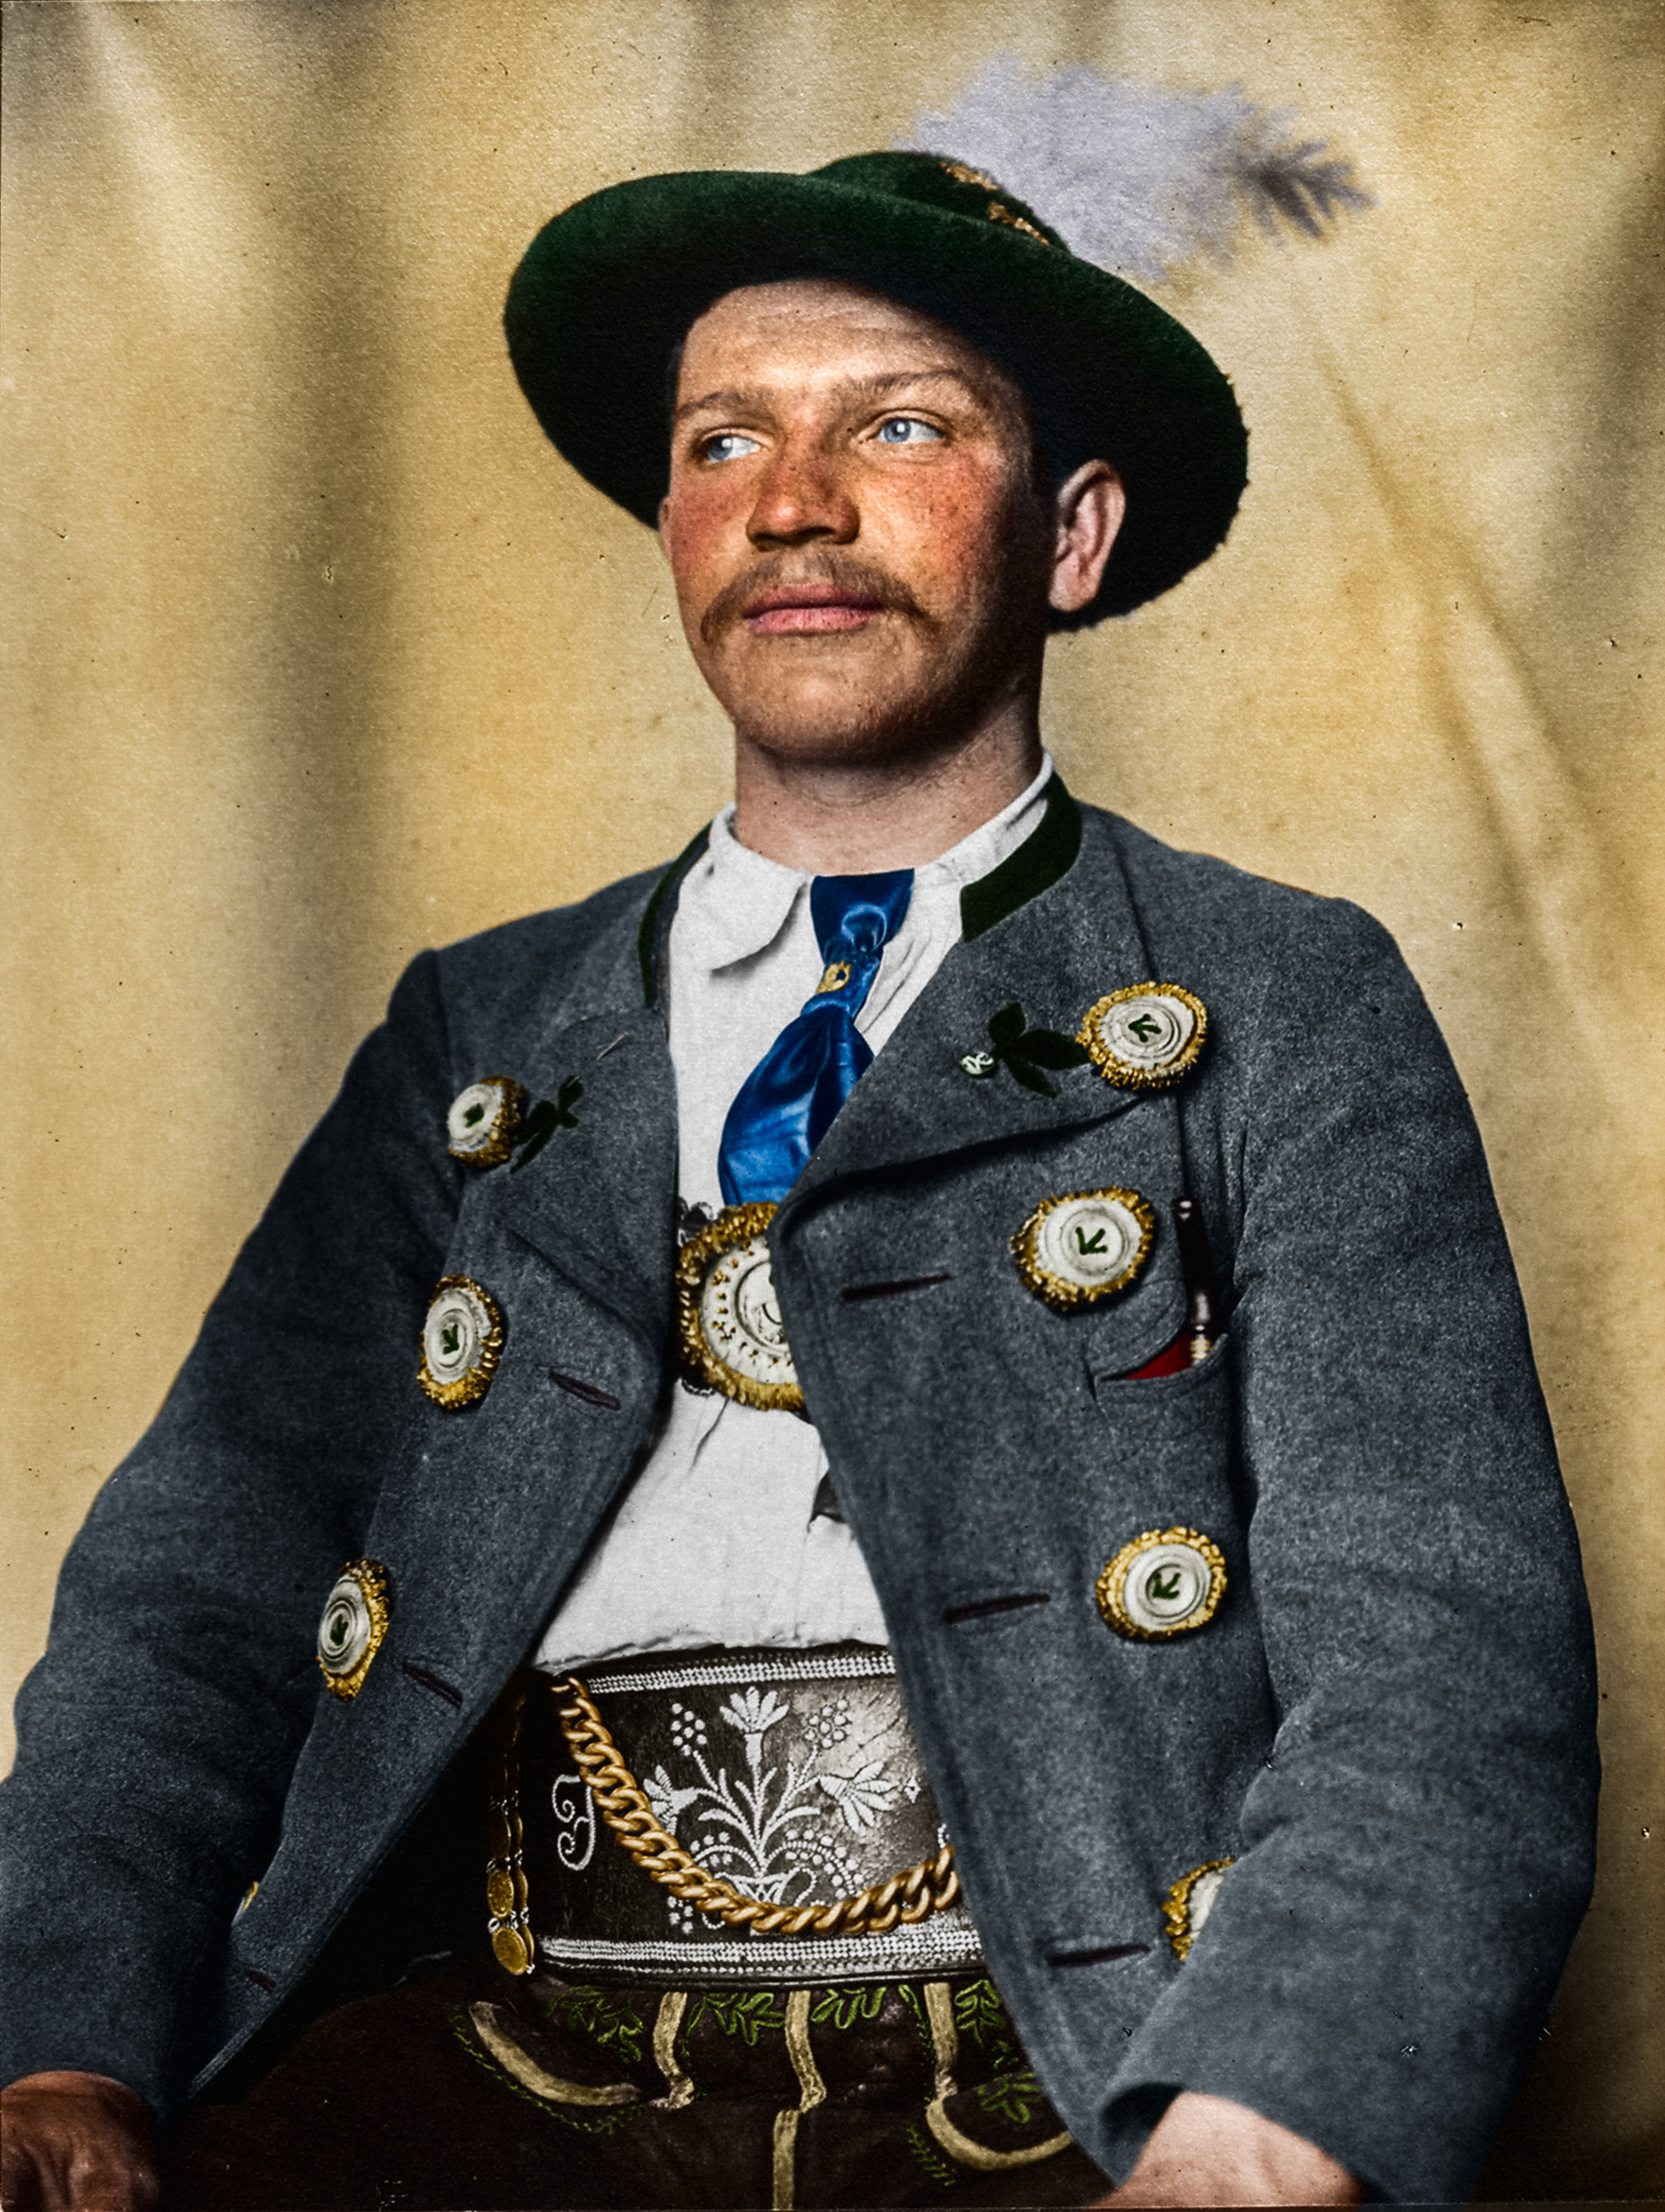 Portrait of a Bavarian man at the Ellis Island Immigration Station, circa 1905.